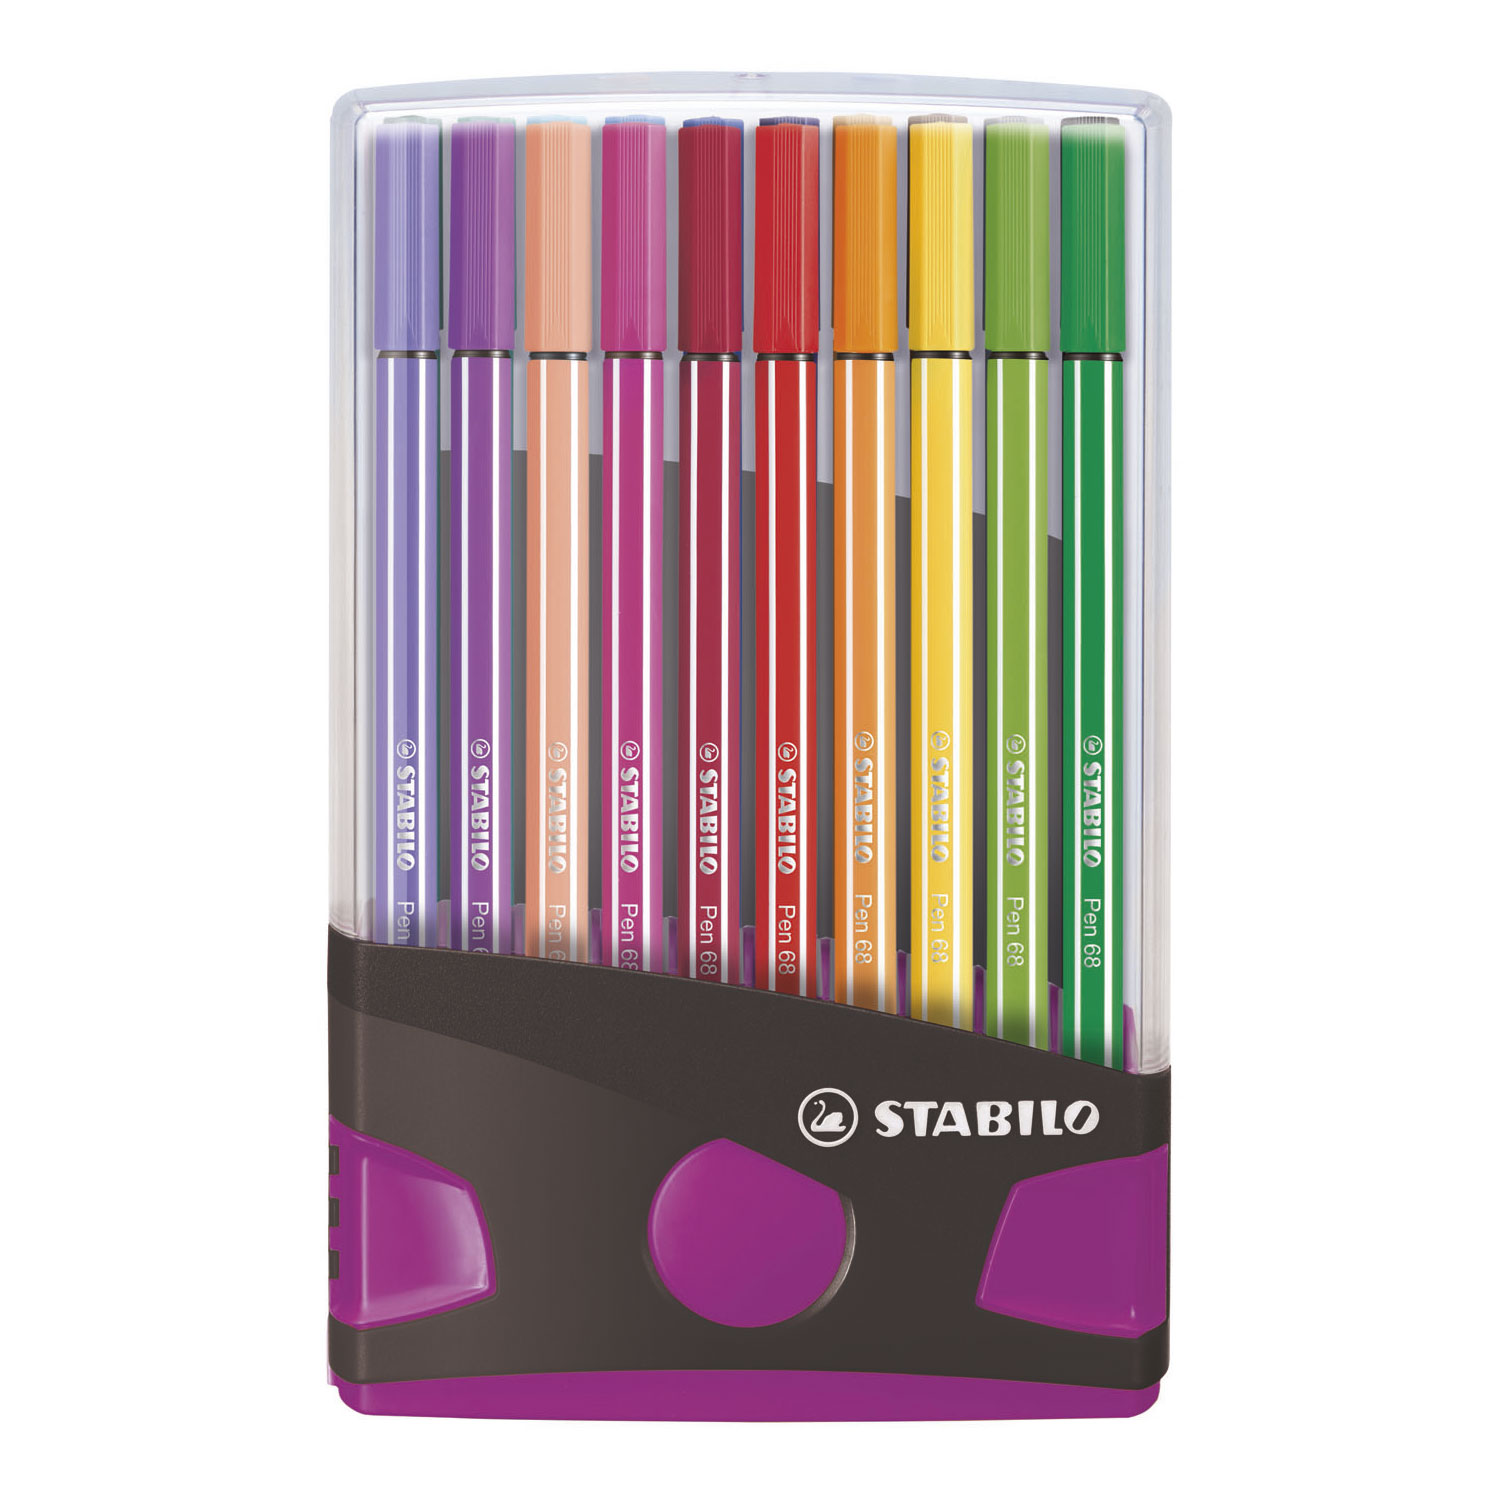 STABILO Pen 68 - Filzstift - ColorParade - Set mit 20 Stück - Anthrazit/Pink